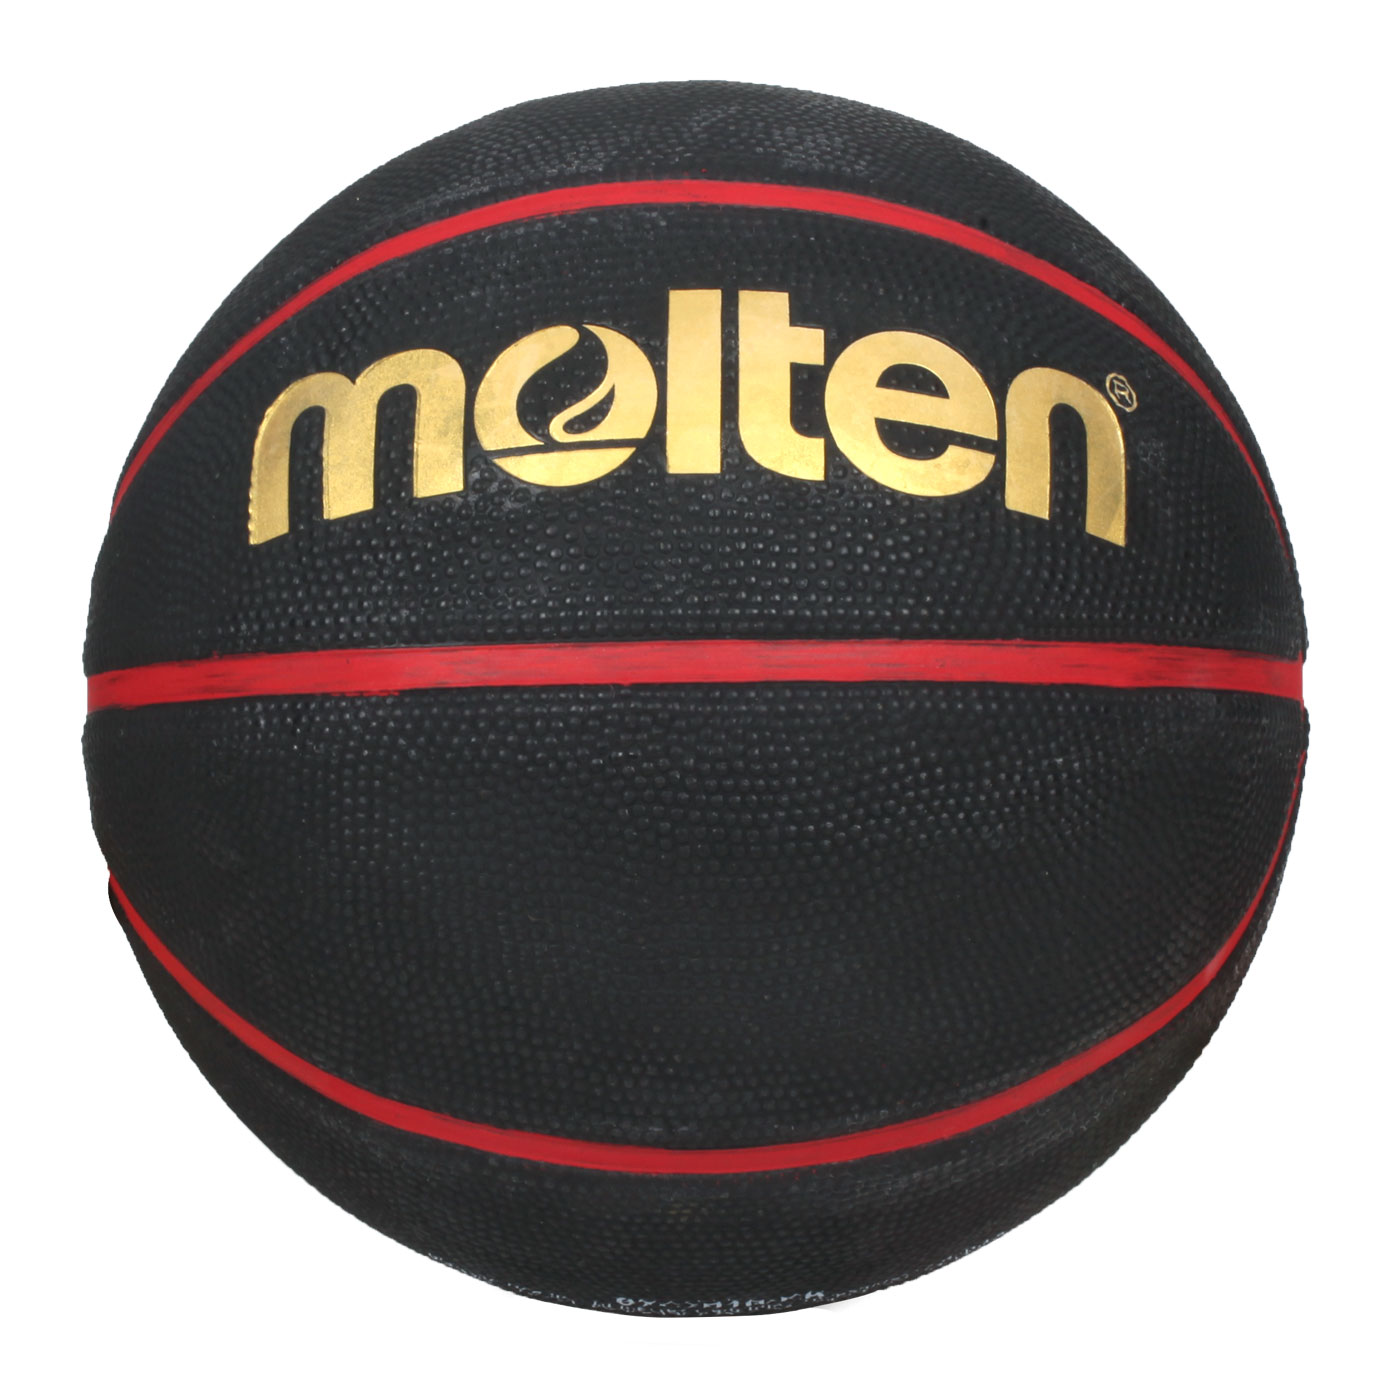 Molten 8片深溝橡膠7號籃球 B7C2010-KR